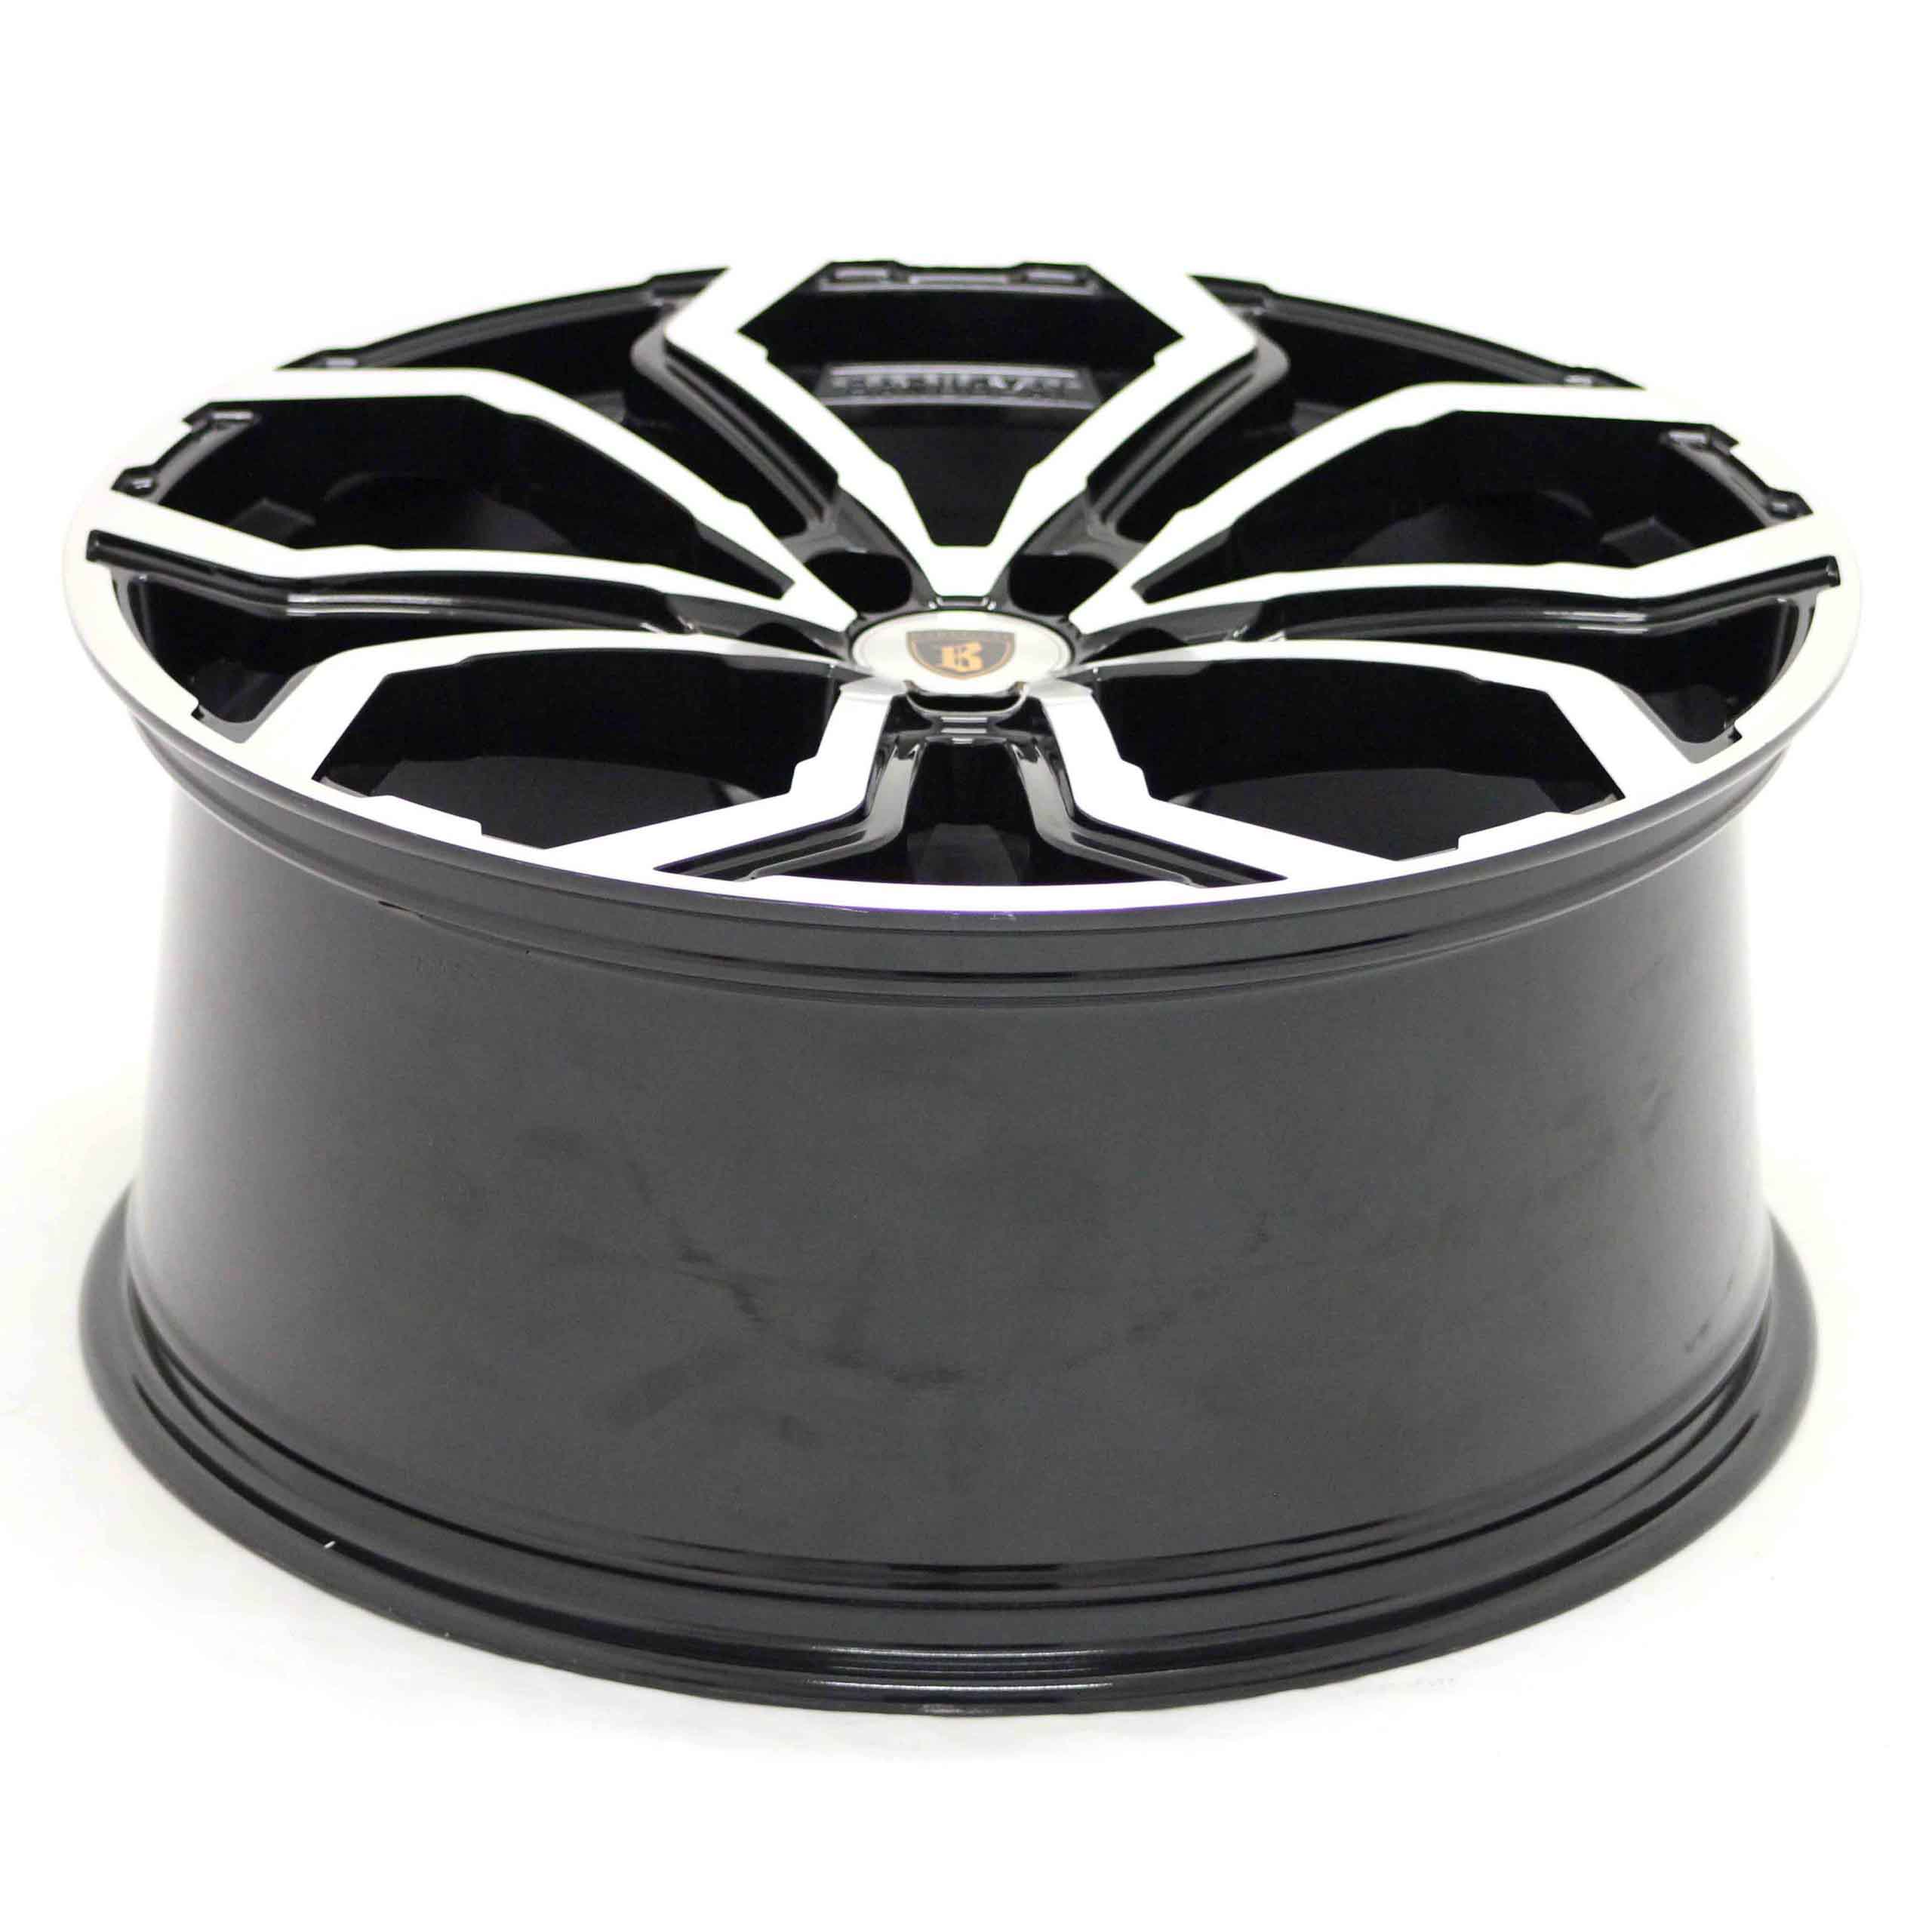 Opium 22” Alloy wheels for Bentley Continental GT